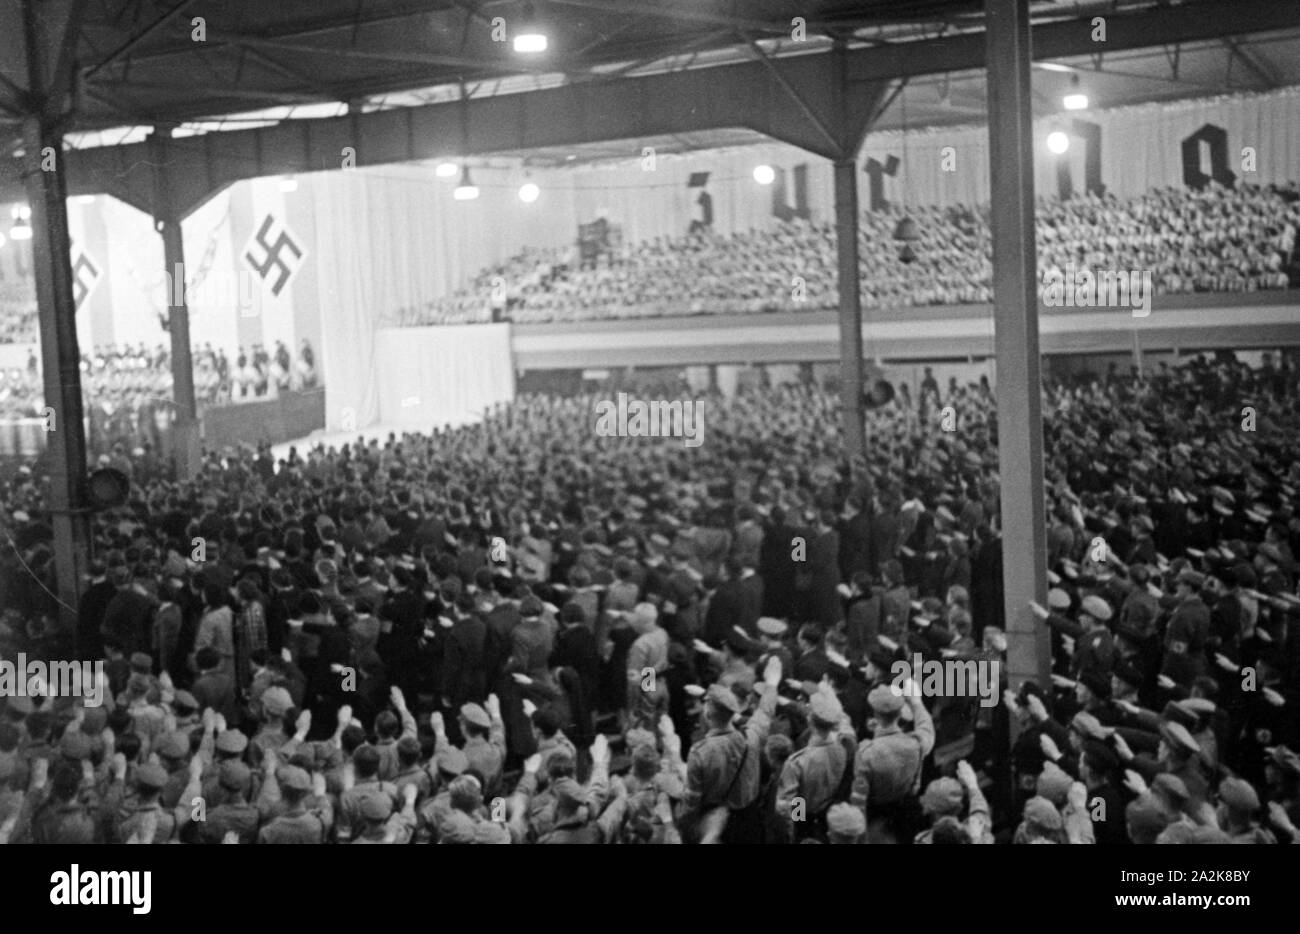 Parteiveranstaltung der NSDAP für den Reichssieger 1936 HJ, Deutschland 1930 er Jahre. Parti nazi d'activité pour la jeunesse hitlerienne Reichssieger 1936 Concurrence, Allemagne 1930. Banque D'Images